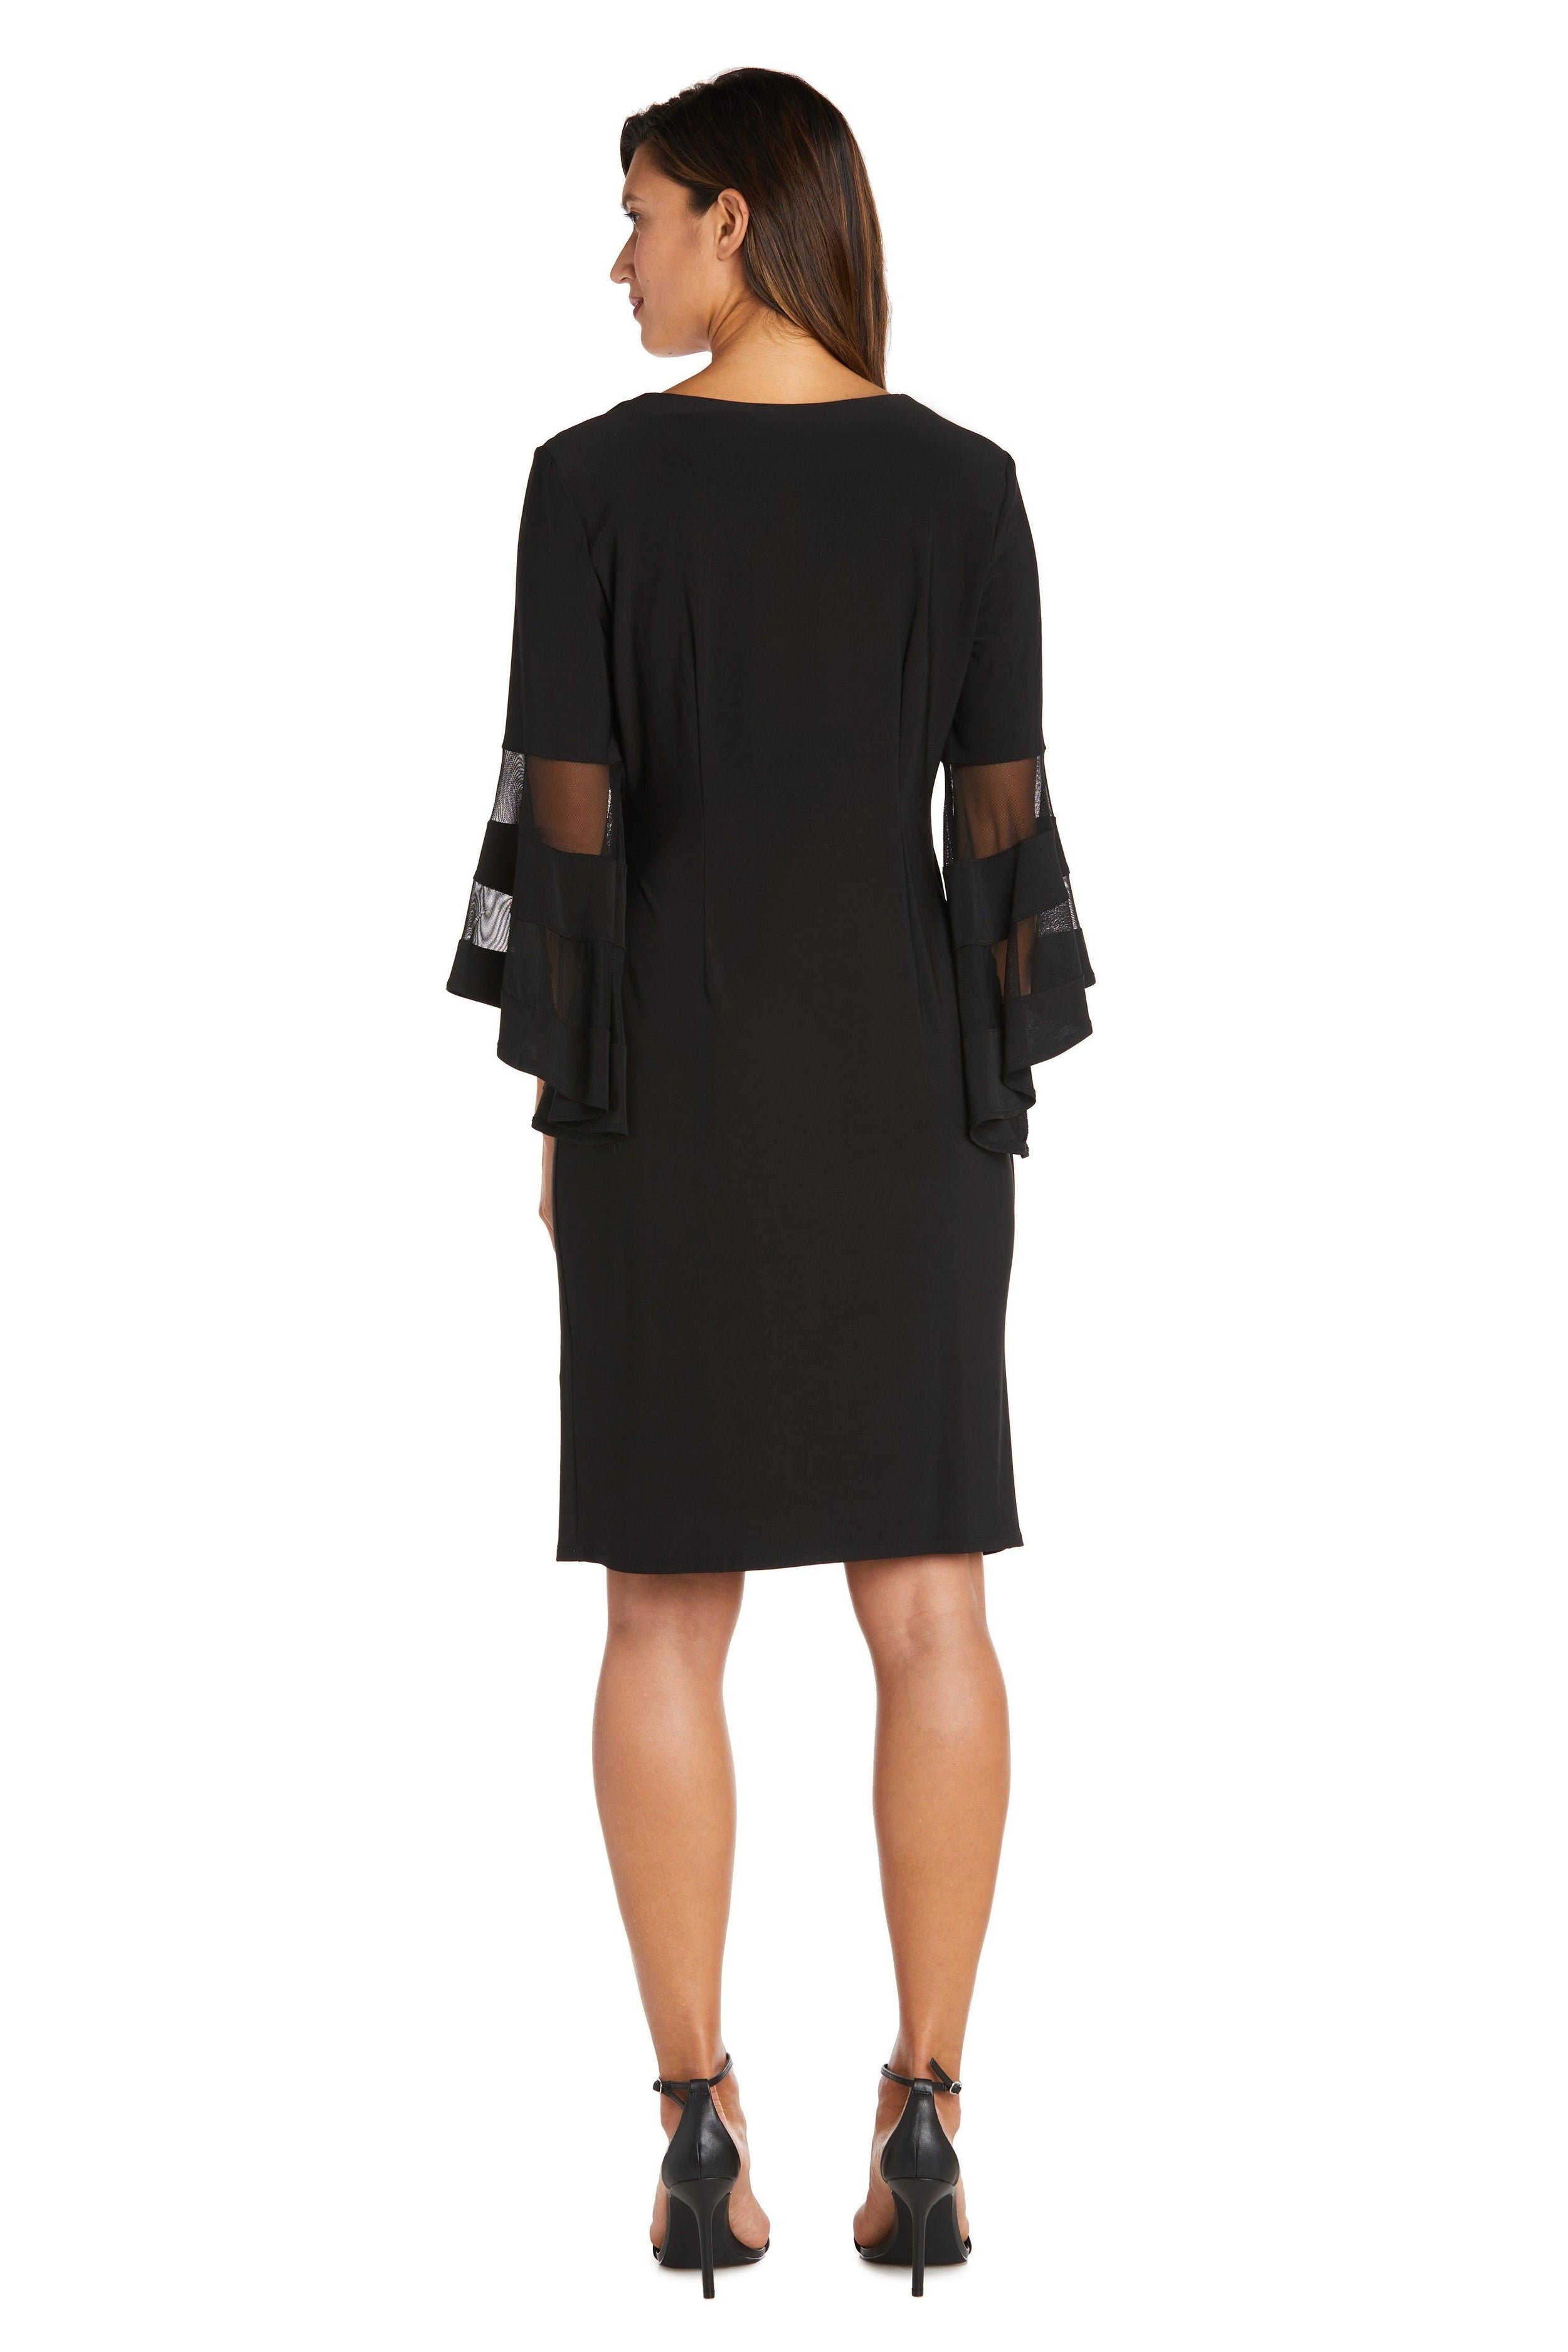 R&M Richards Short Bell Sleeve Petite Dress 3561P - The Dress Outlet